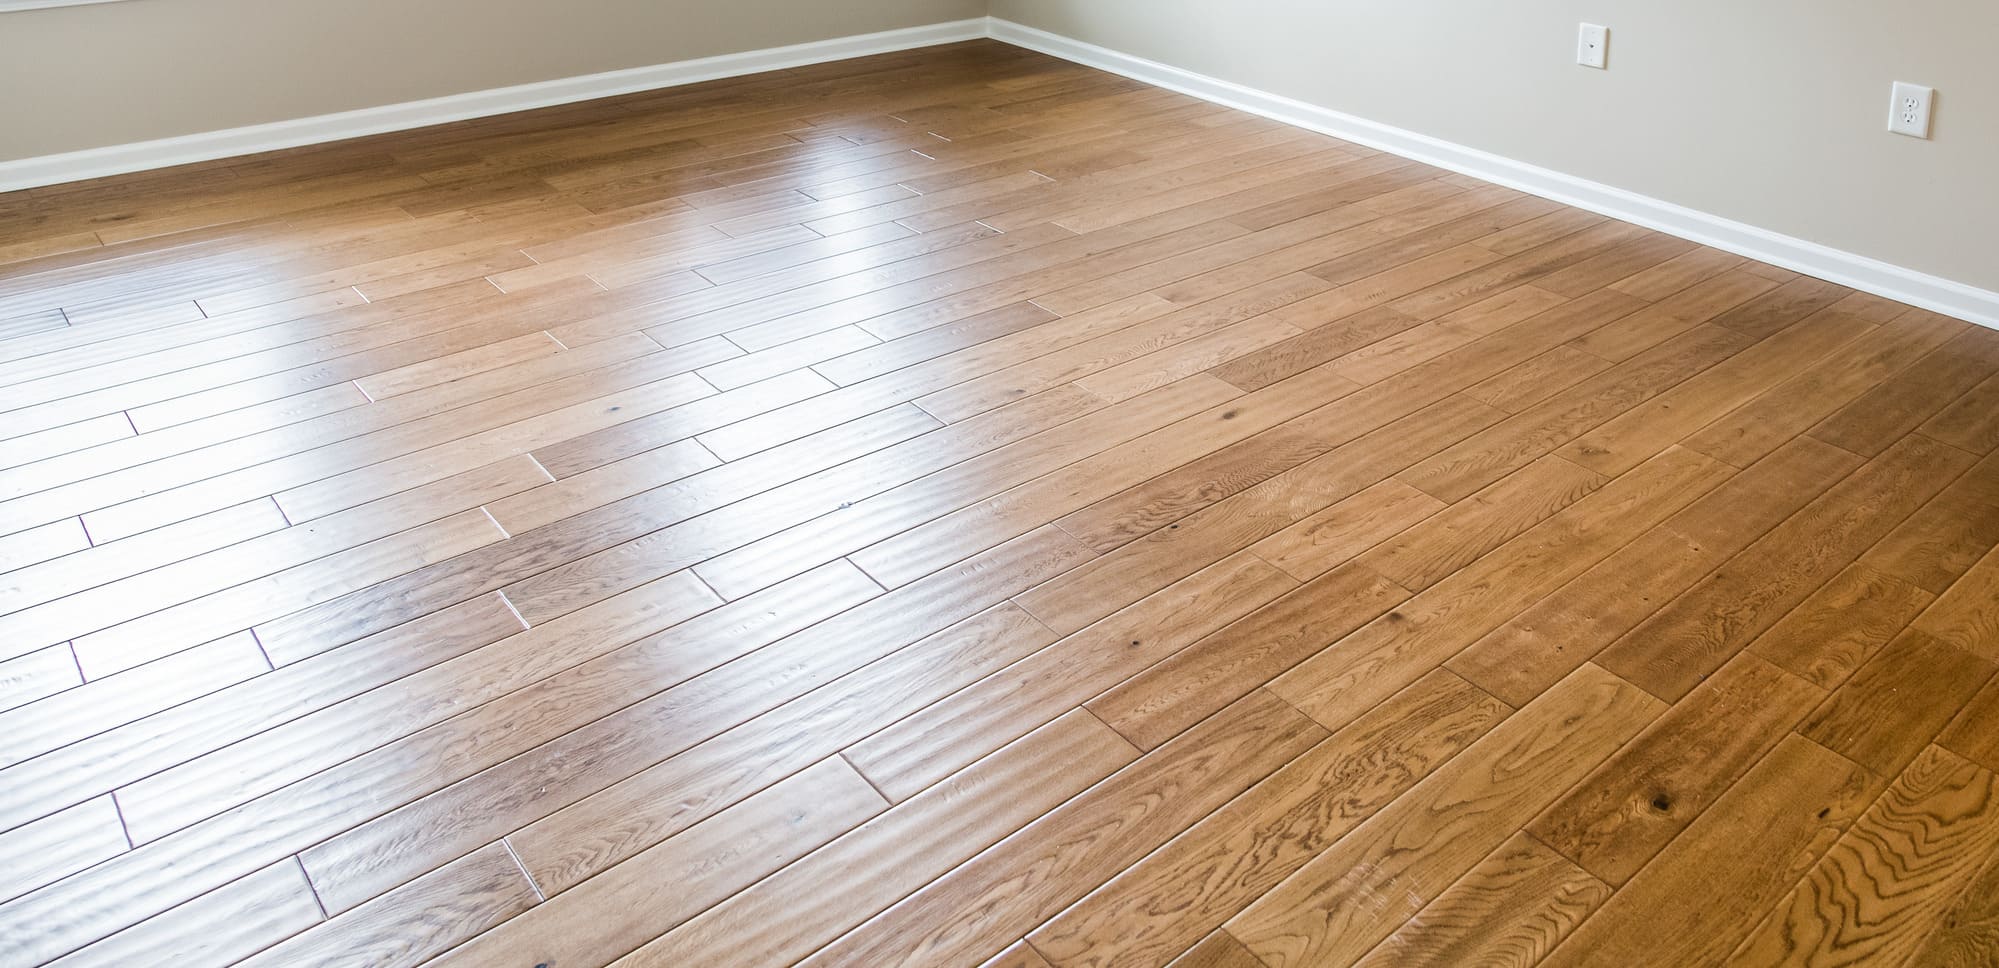 Why Should You Perform Hardwood Floor Refinishing?